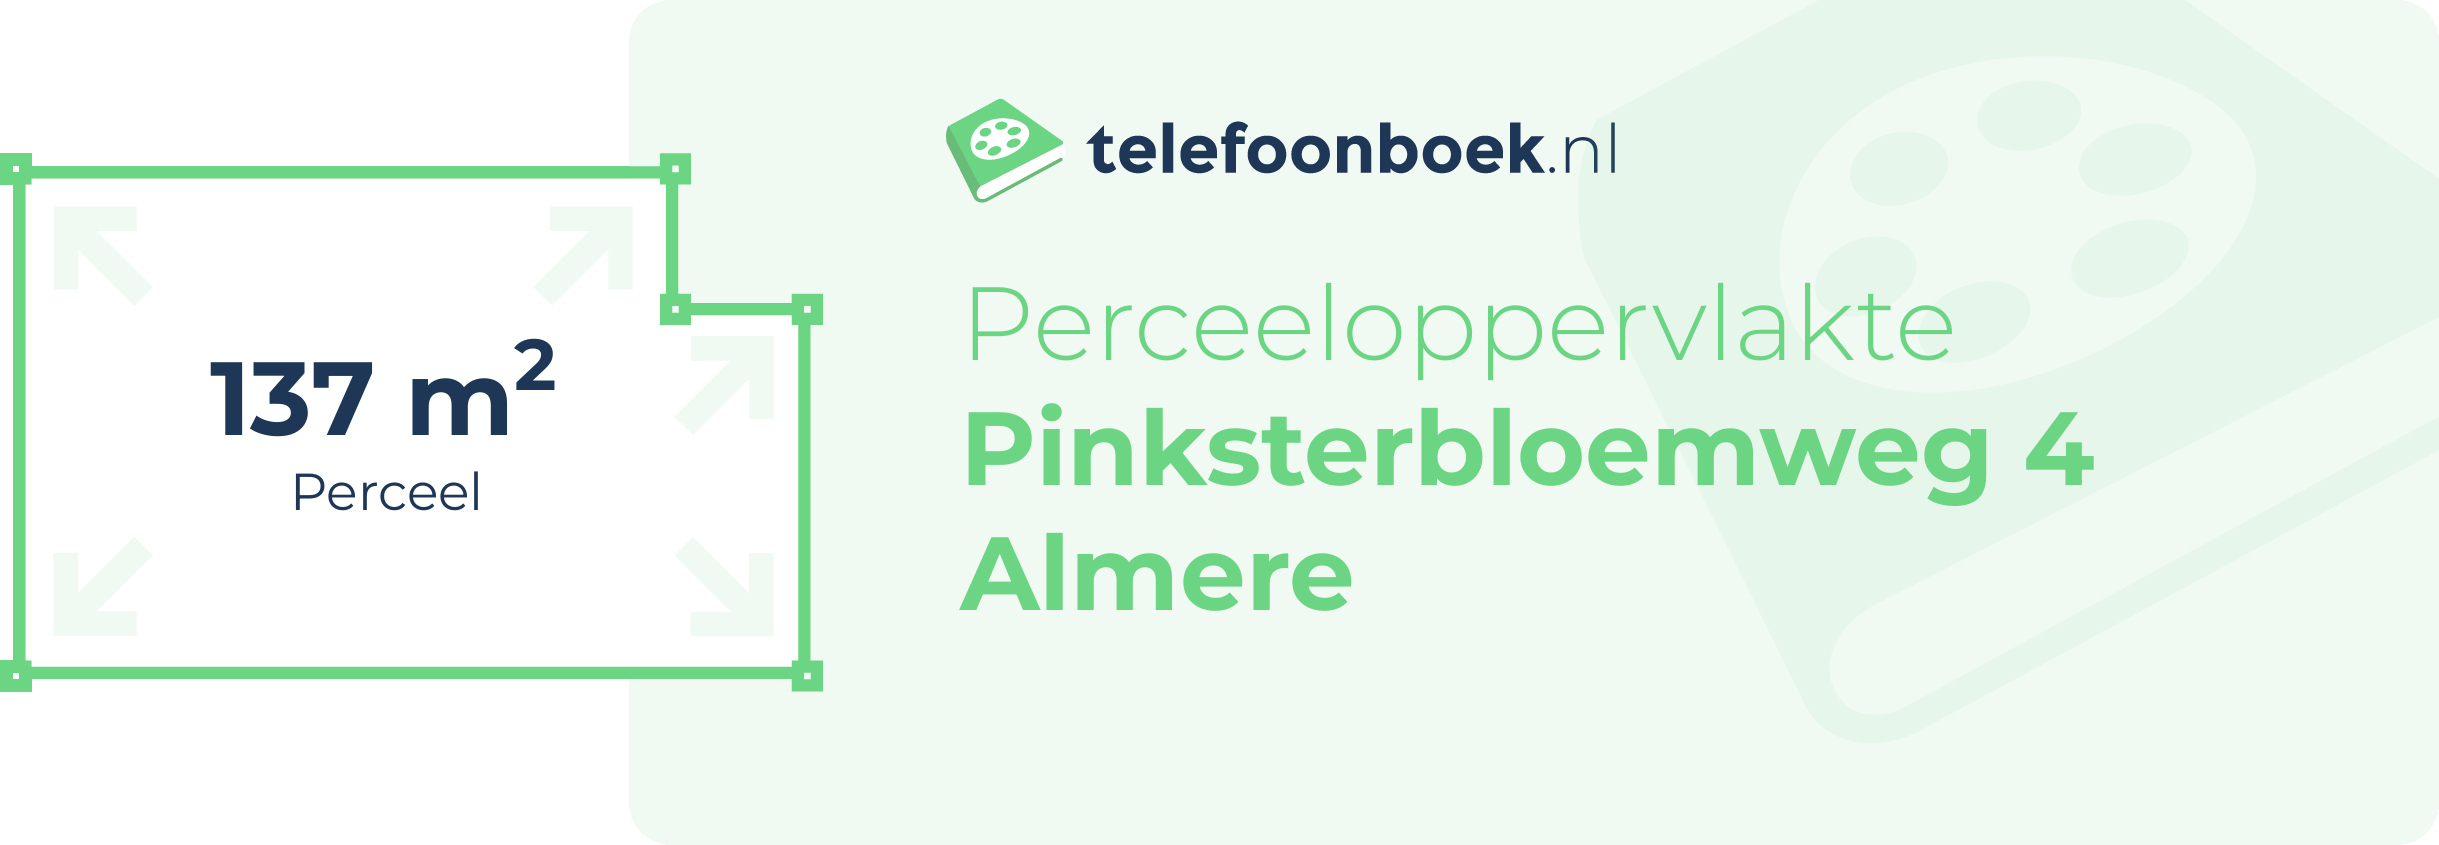 Perceeloppervlakte Pinksterbloemweg 4 Almere